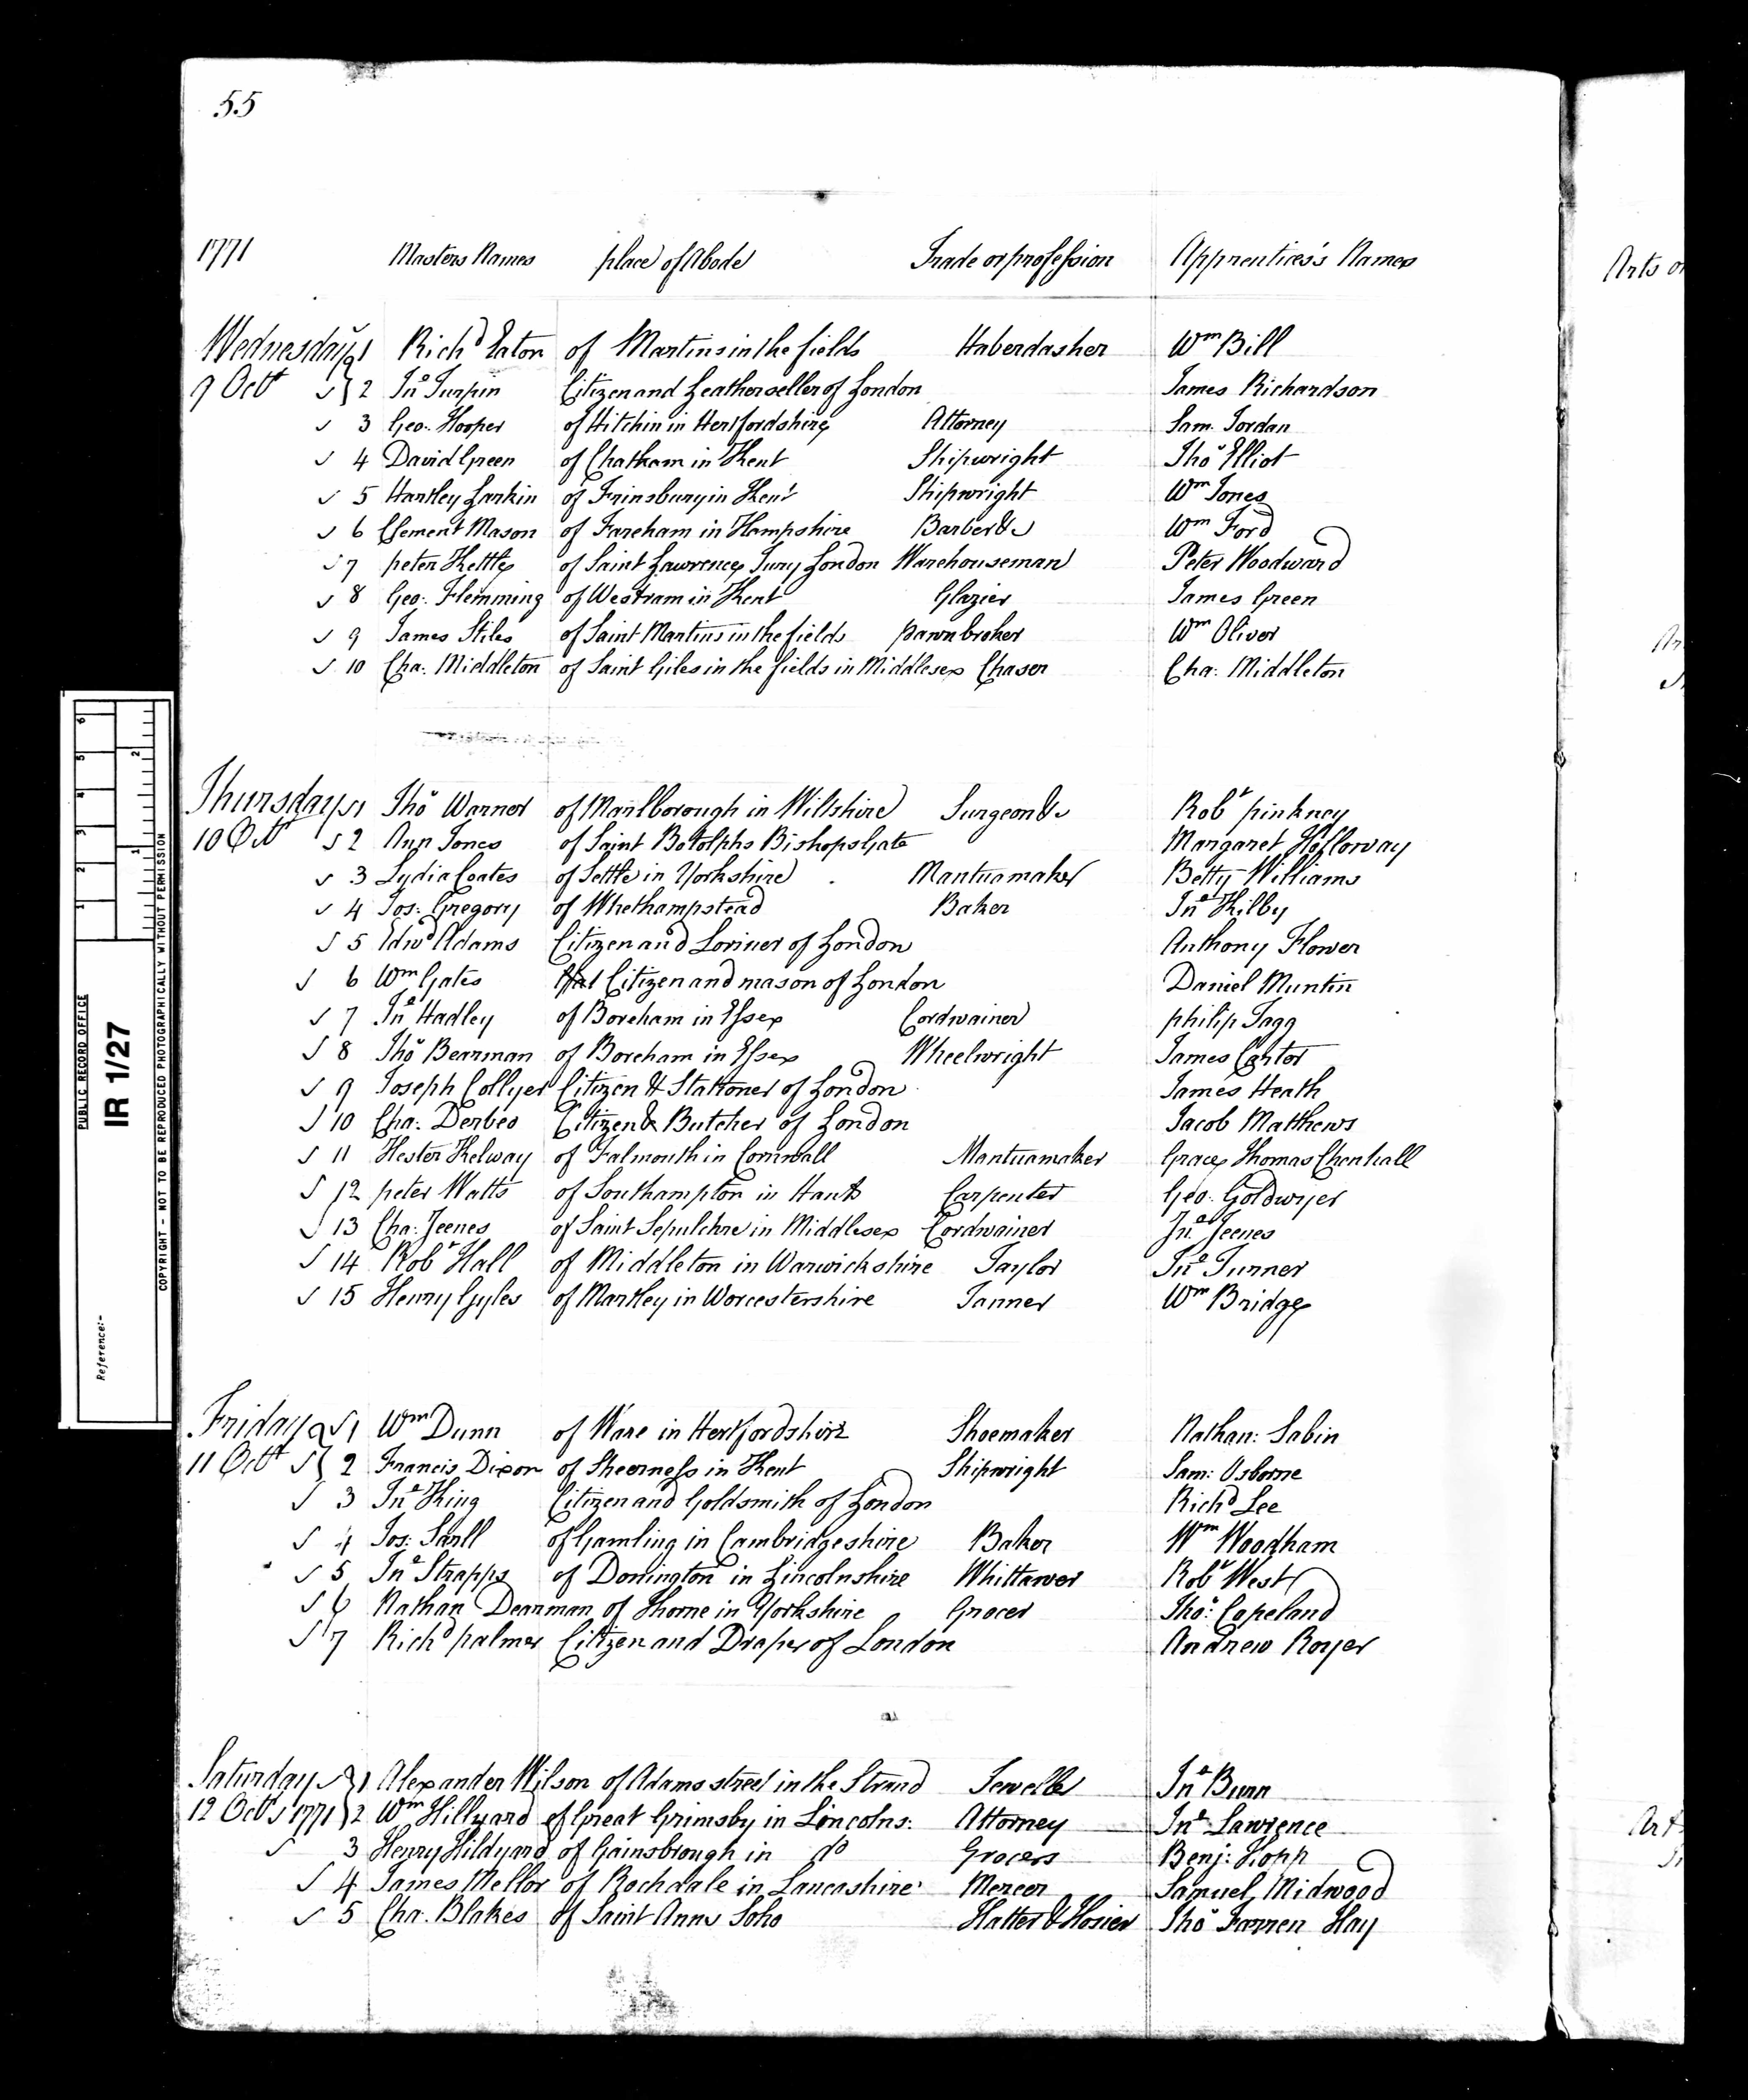 Thomas Bearman apprentices indentures 1771